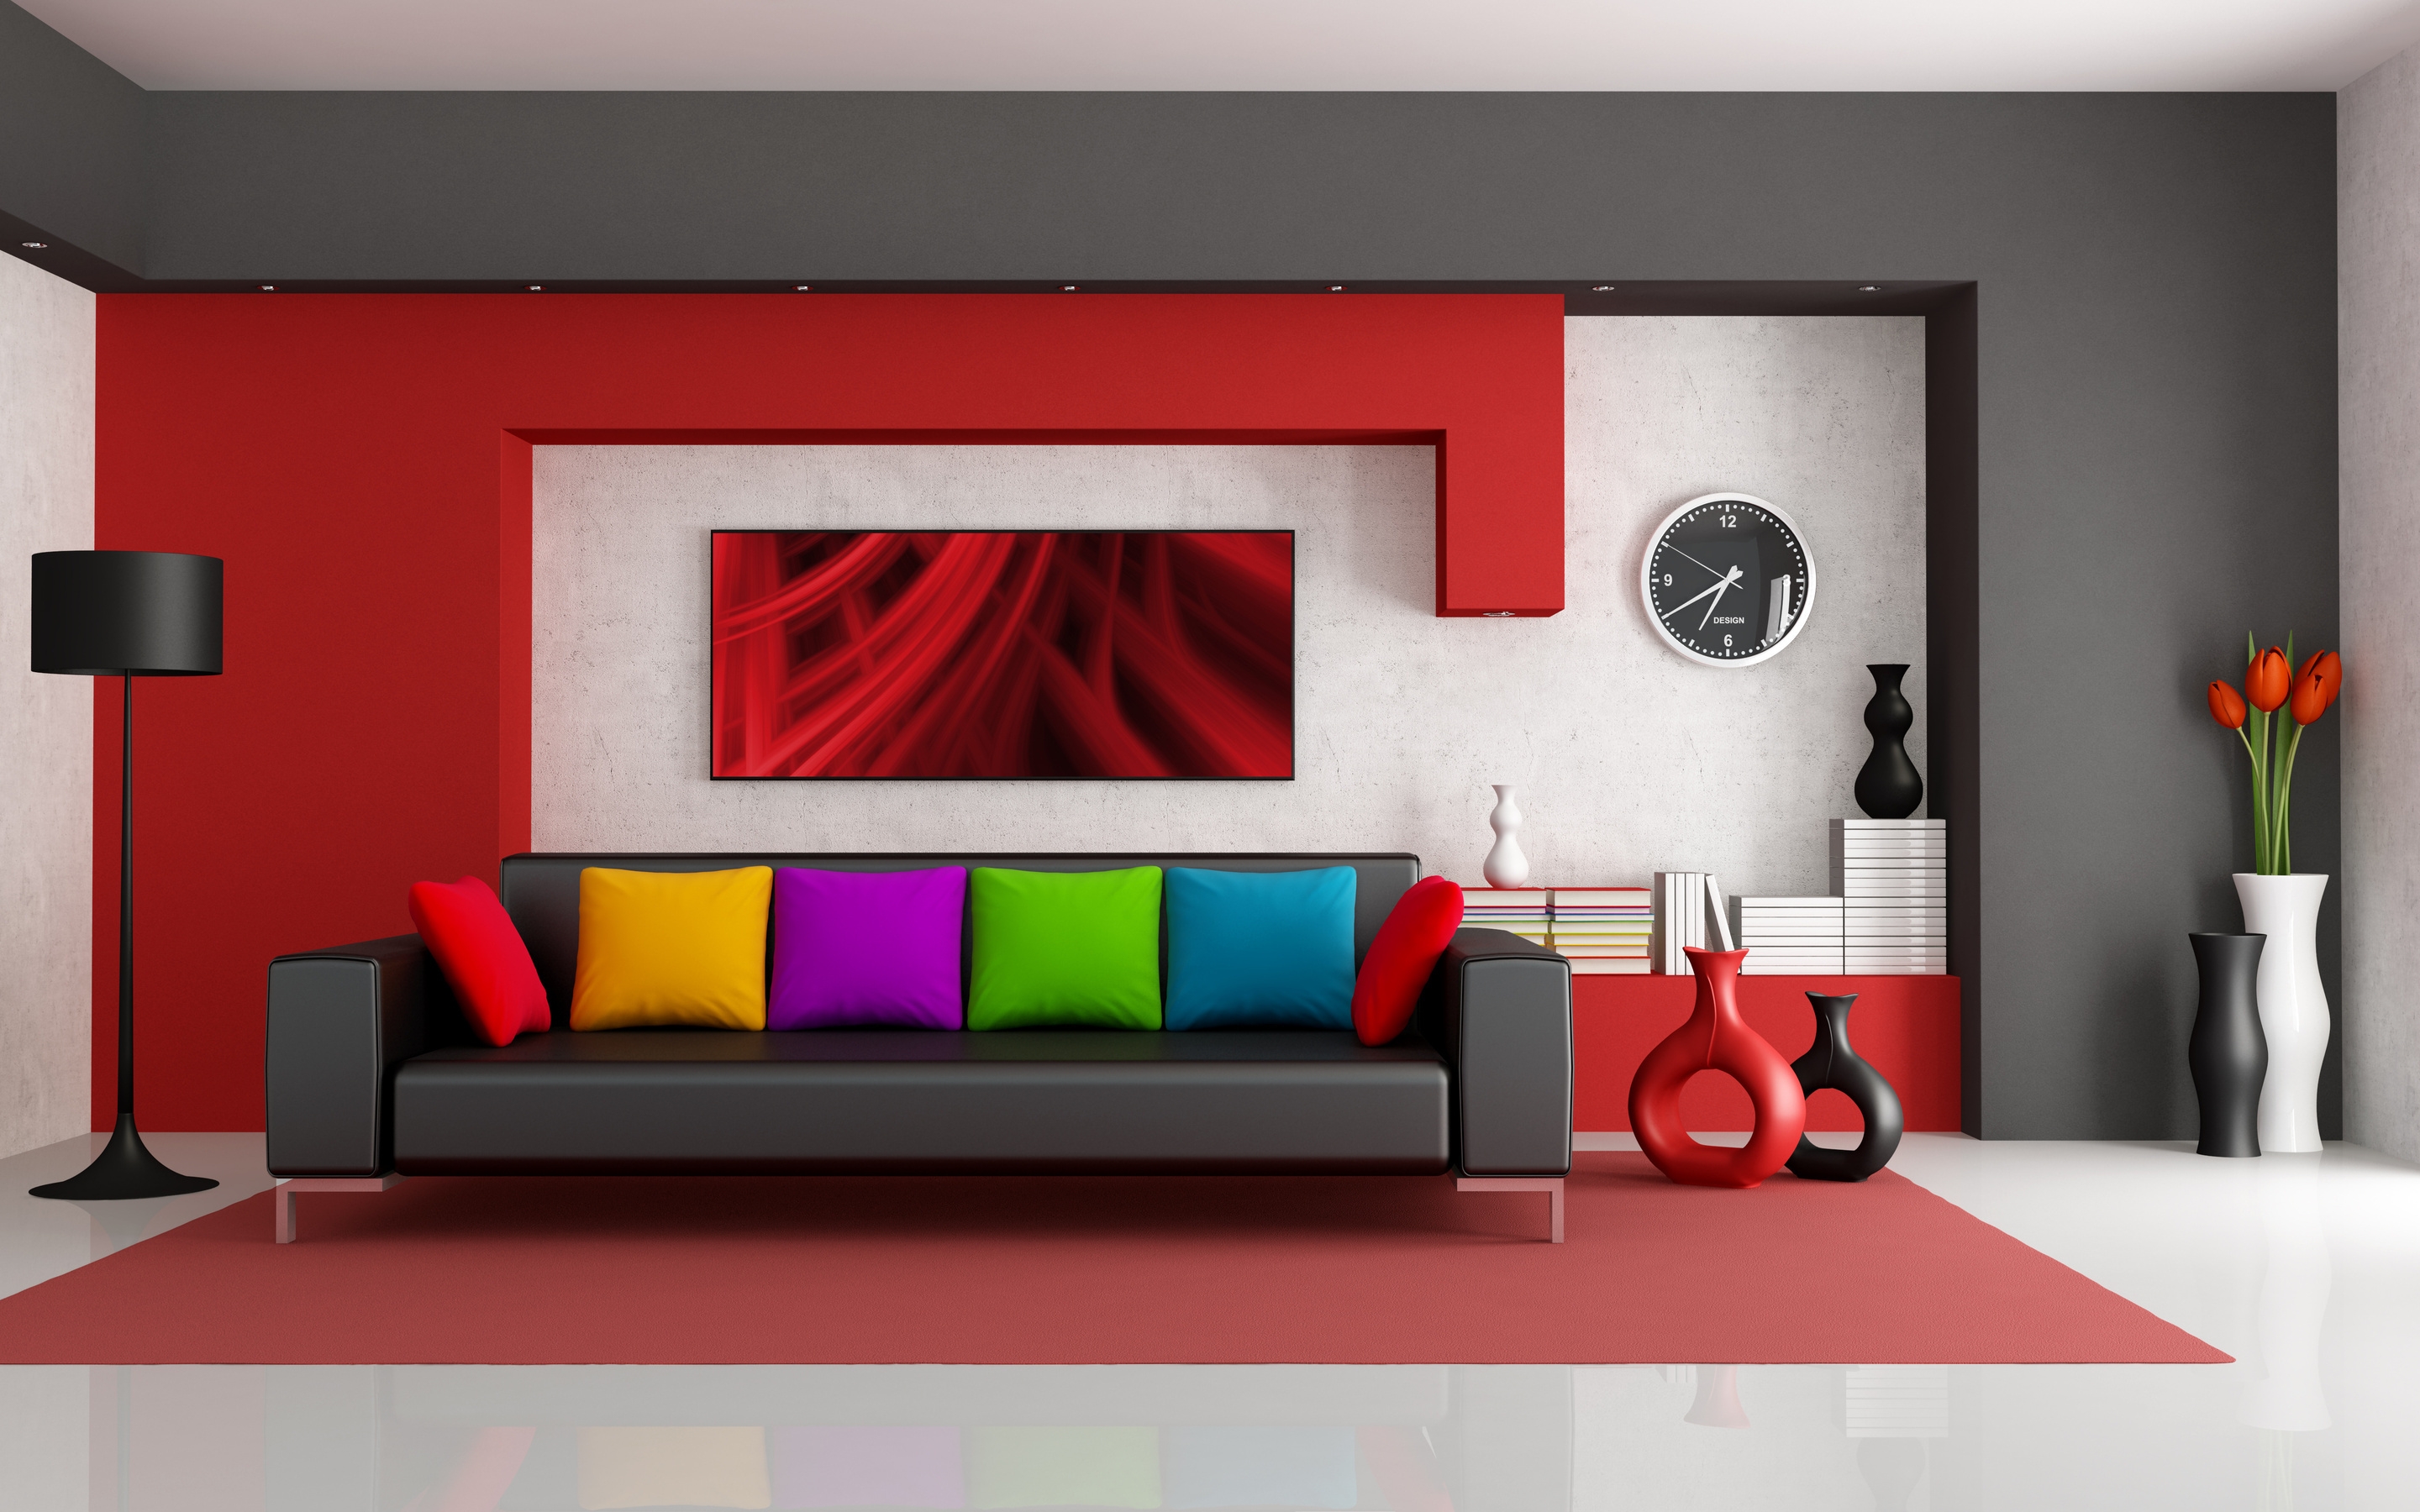 Living Room Furniture Ideas for 2880 x 1800 Retina Display resolution